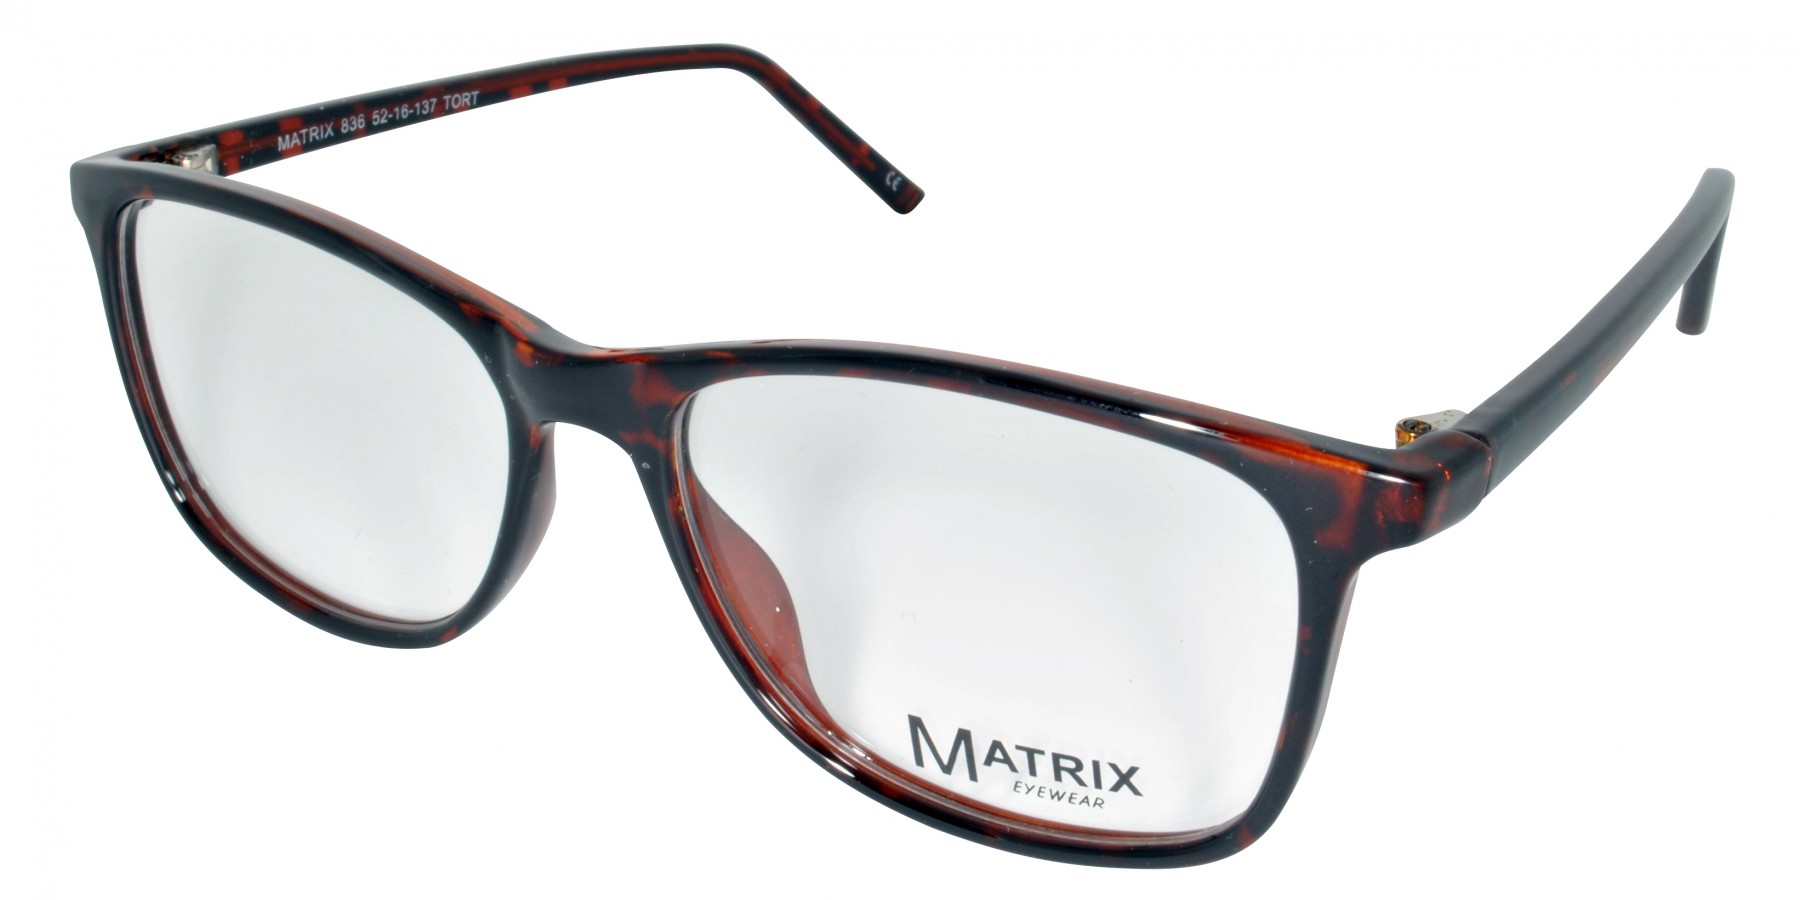 Matrix 836 Prescription Glasses